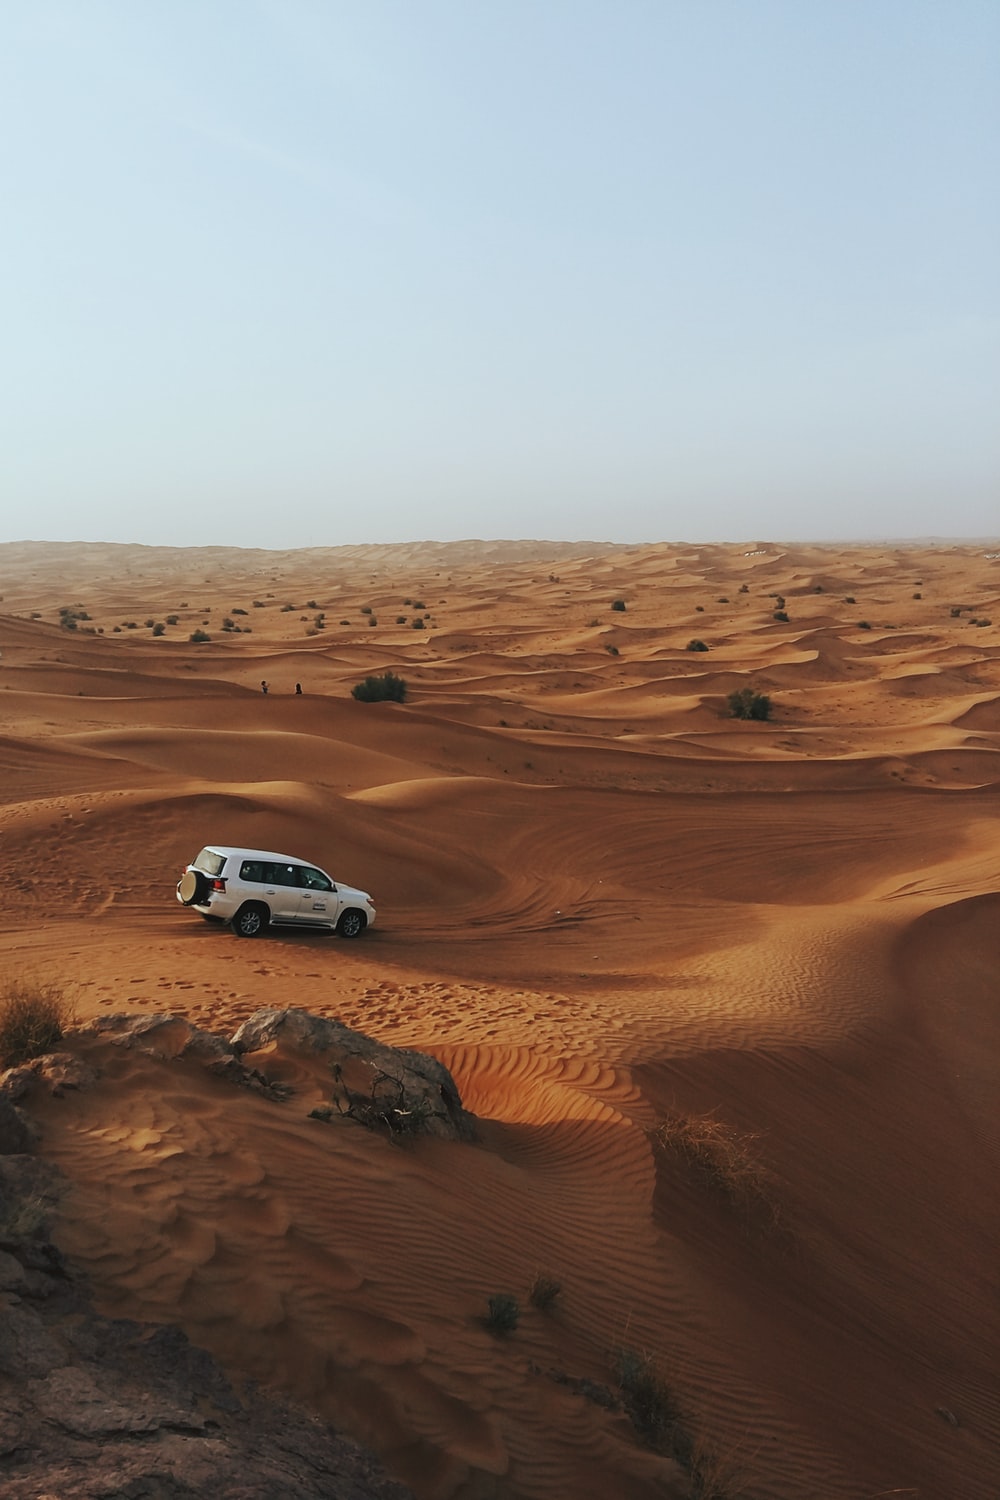 Dubai Desert Picture. Download Free Image